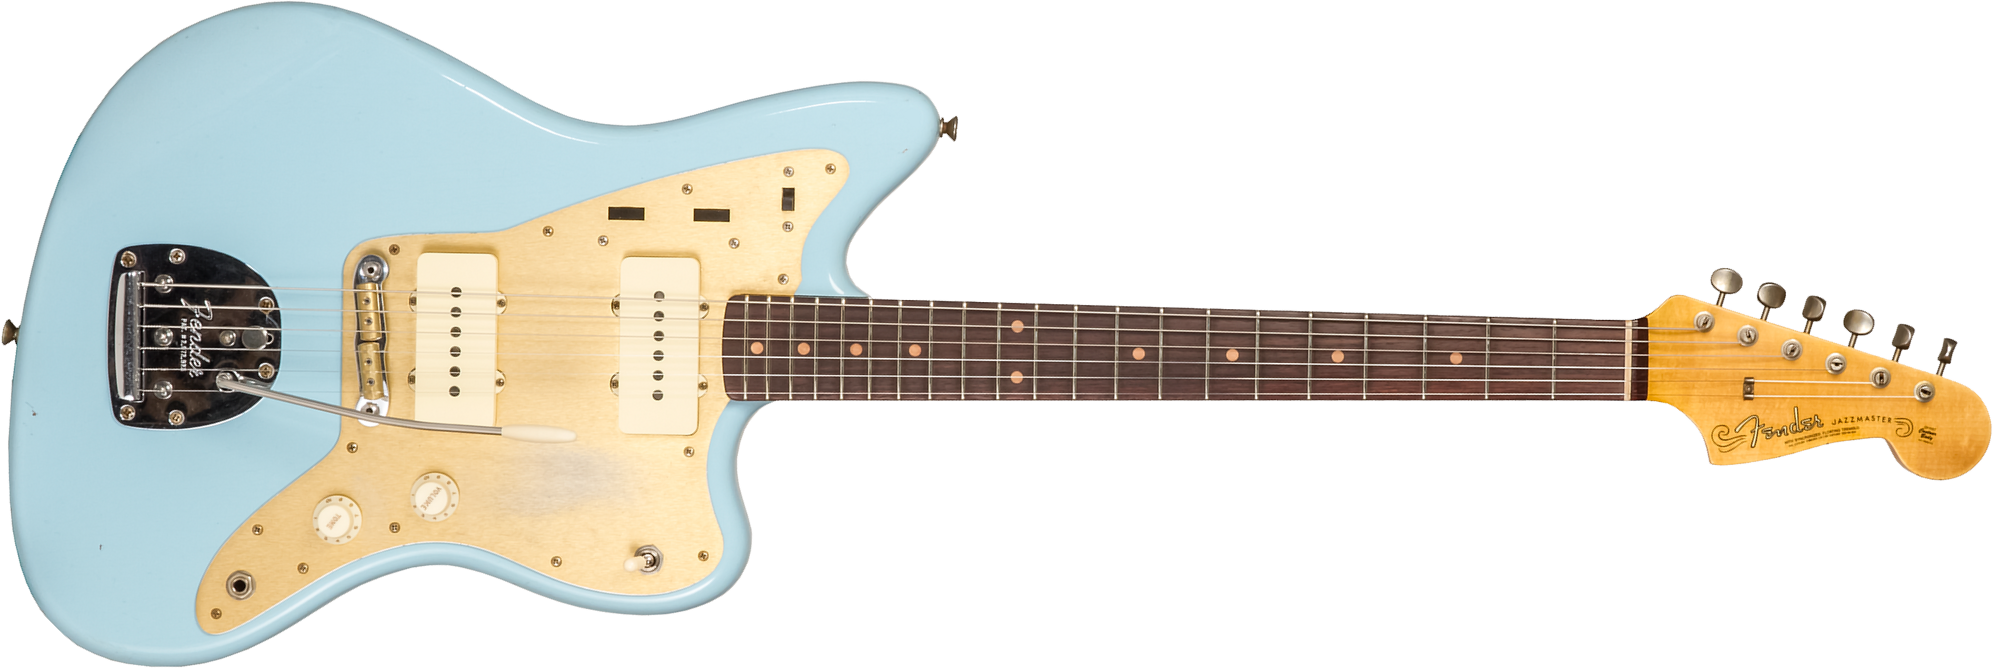 Fender Custom Shop Jazzmaster 1959 250k 2s Trem Rw #cz576203 - Journeyman Relic Aged Daphne Blue - Retro rock electric guitar - Main picture